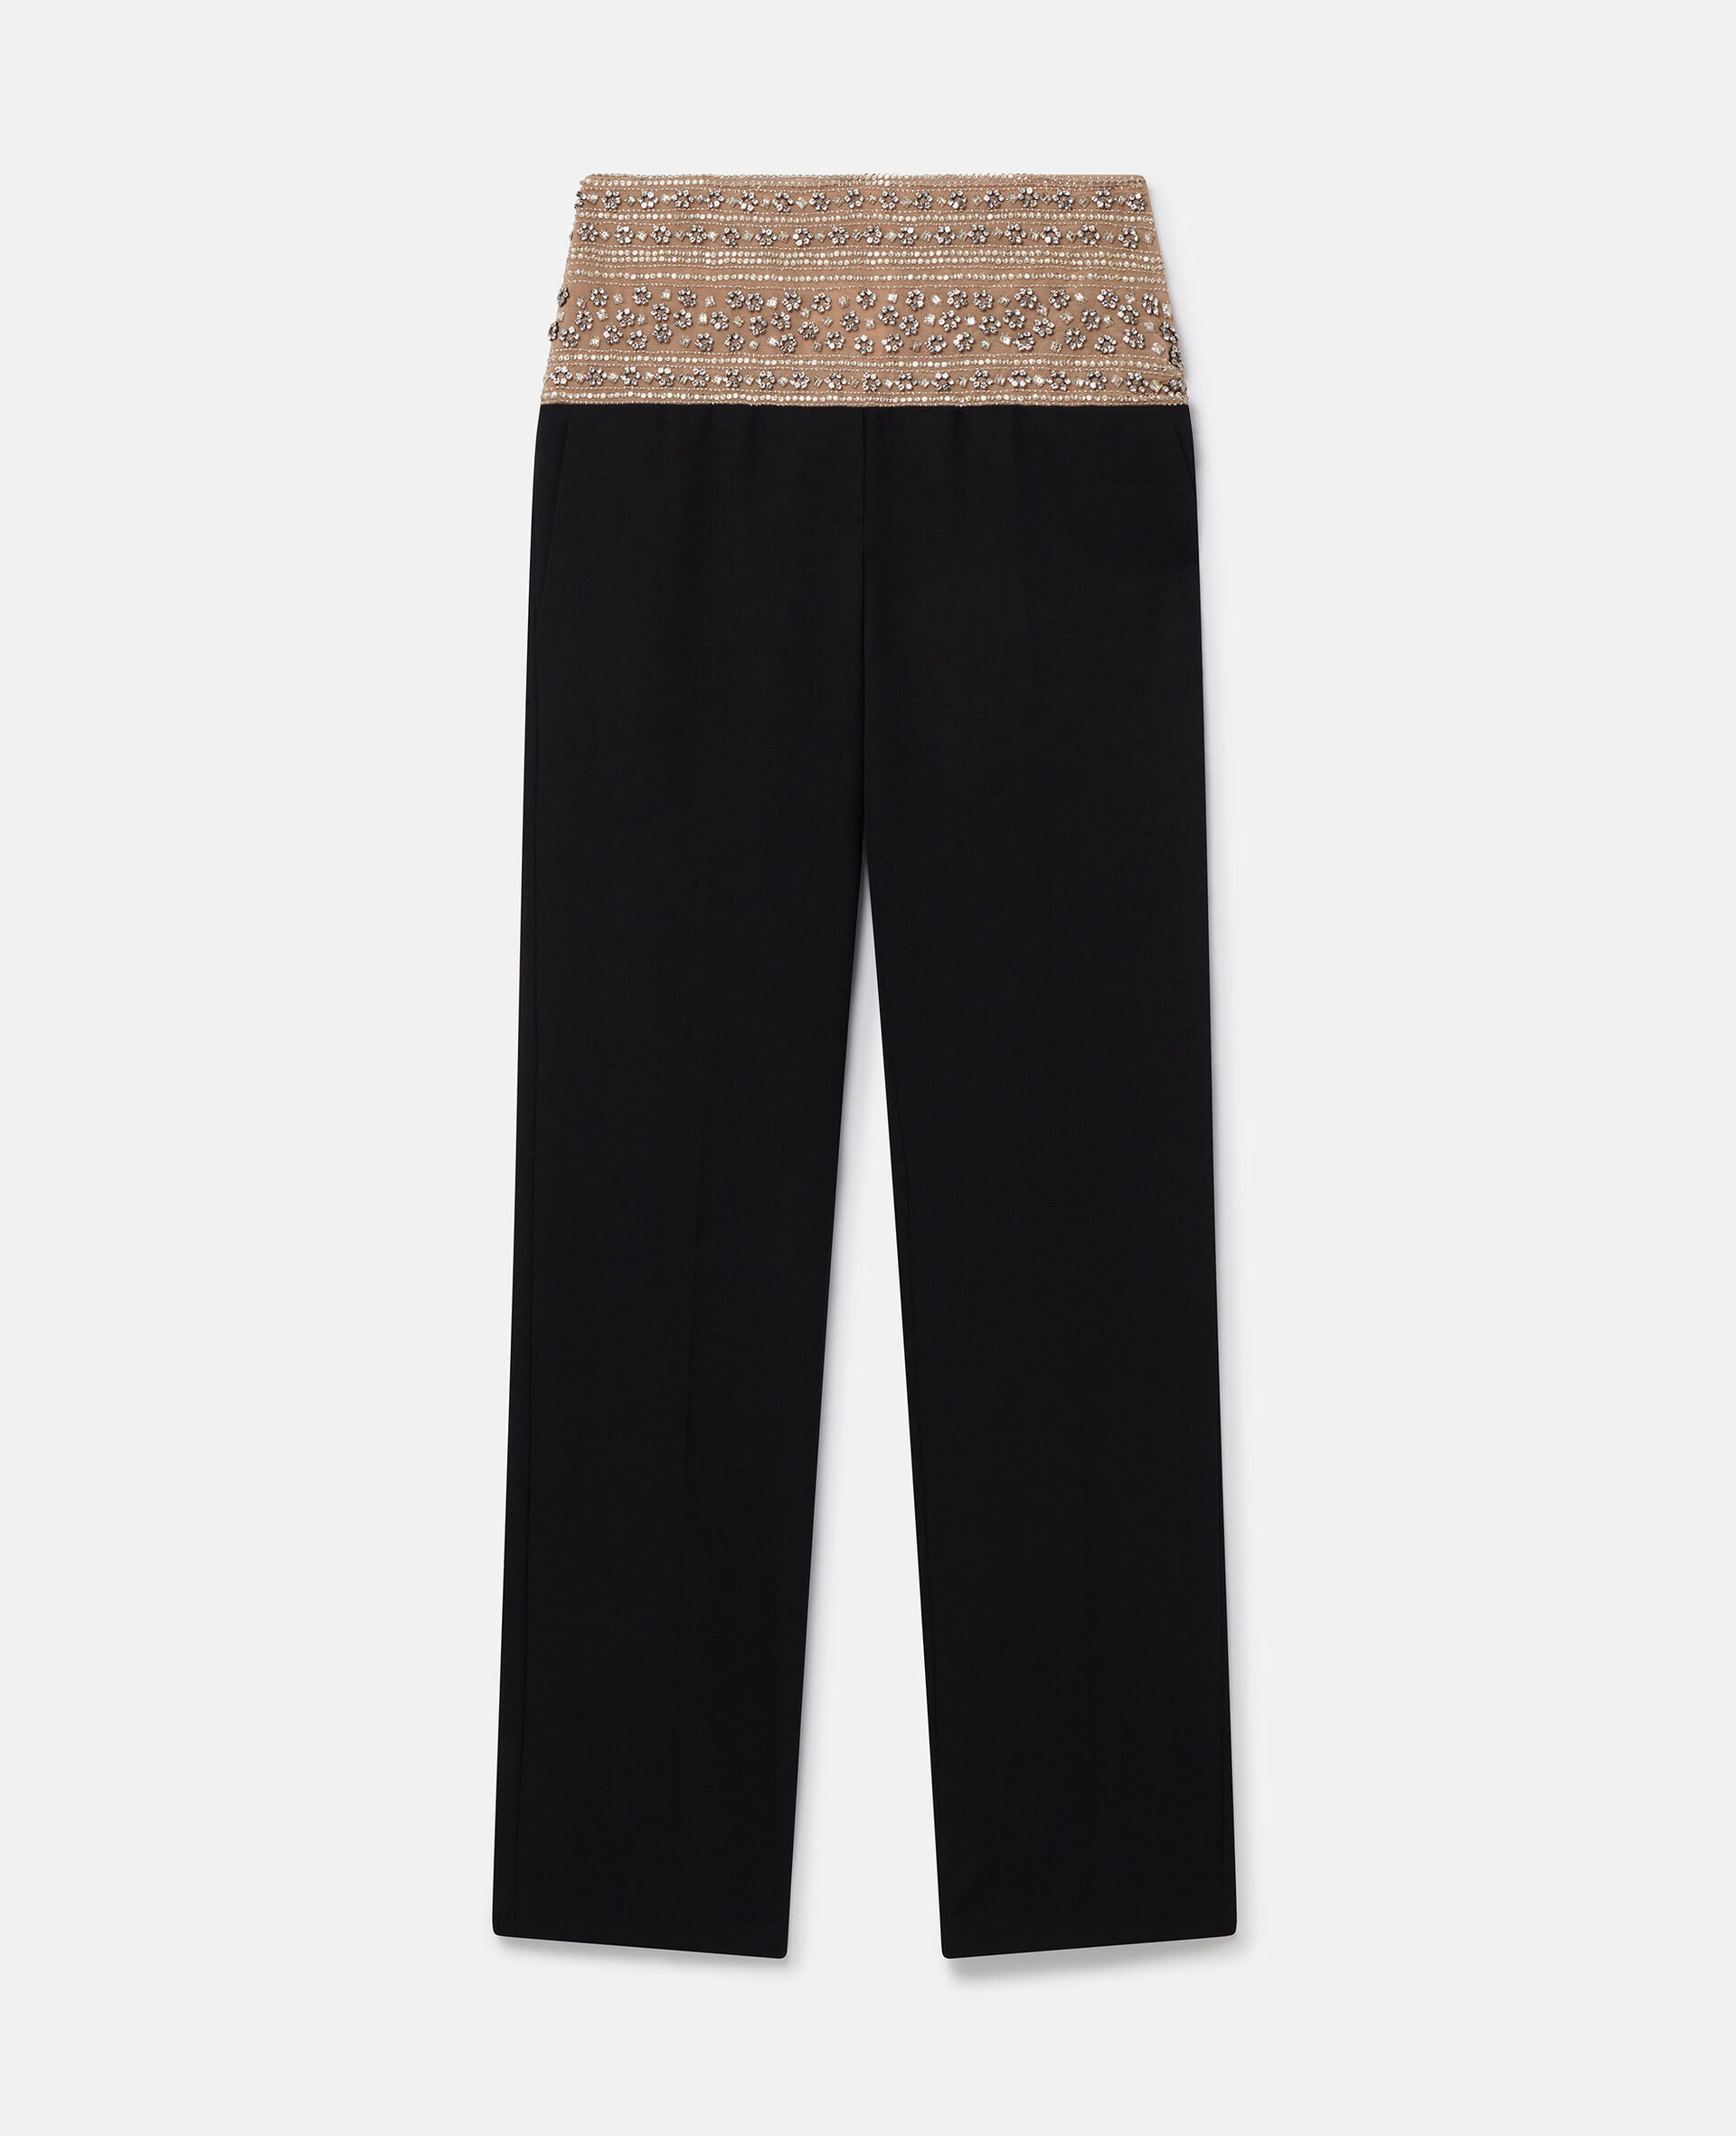 Pantaloni in lana decorati con cristalli-Nero-medium